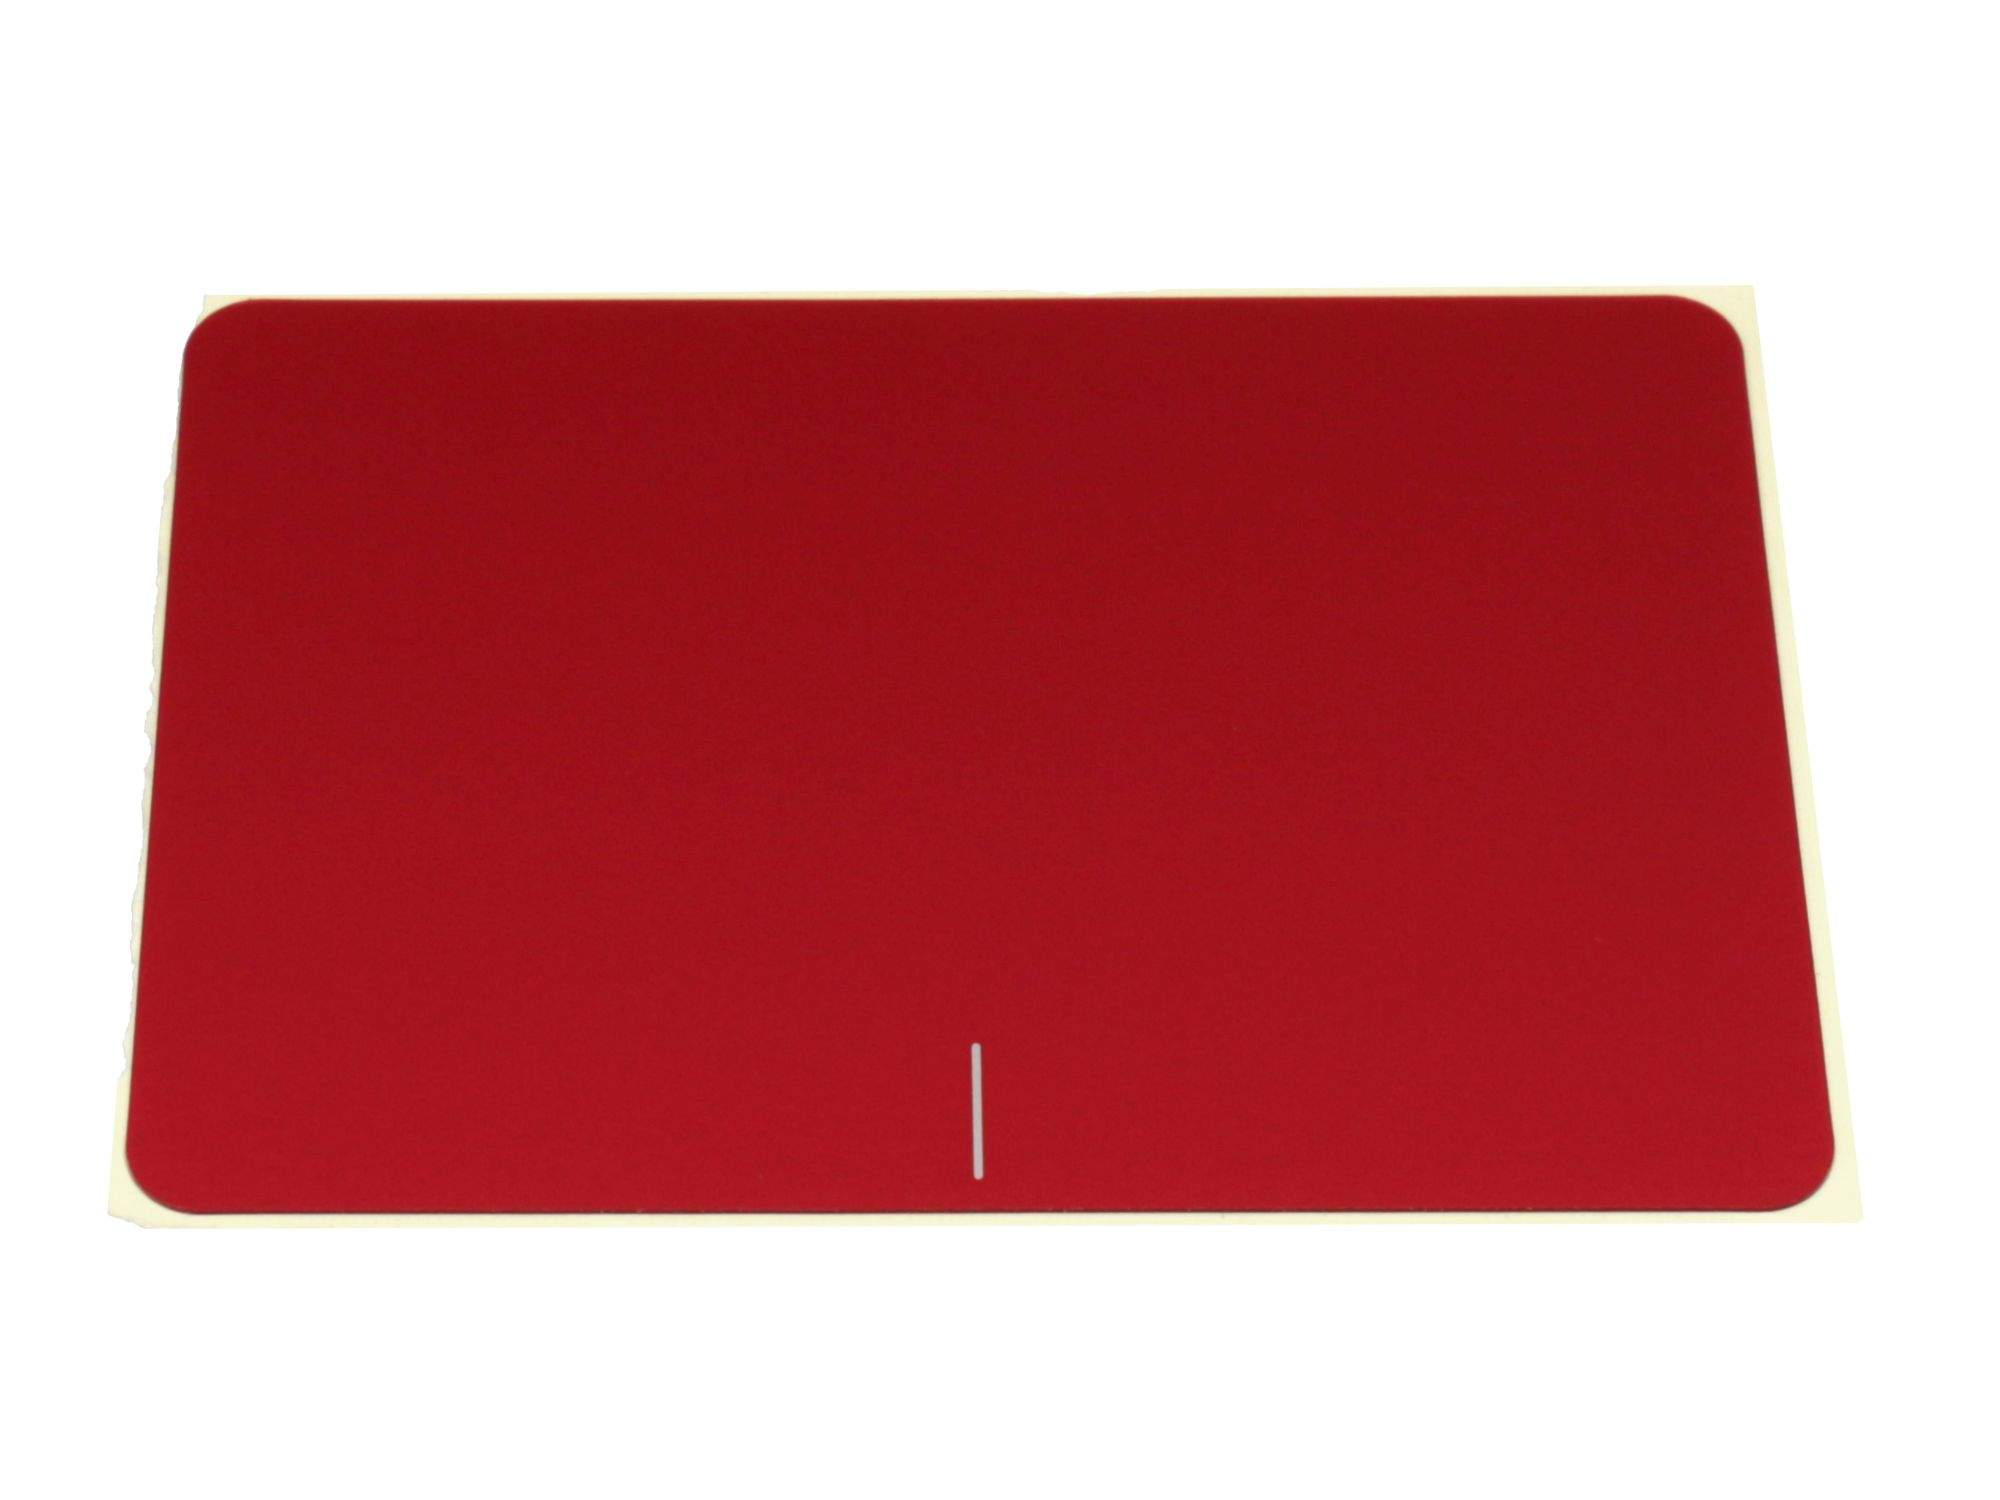 ASUS Touchpad Abdeckung rot für Asus F556UJ Serie